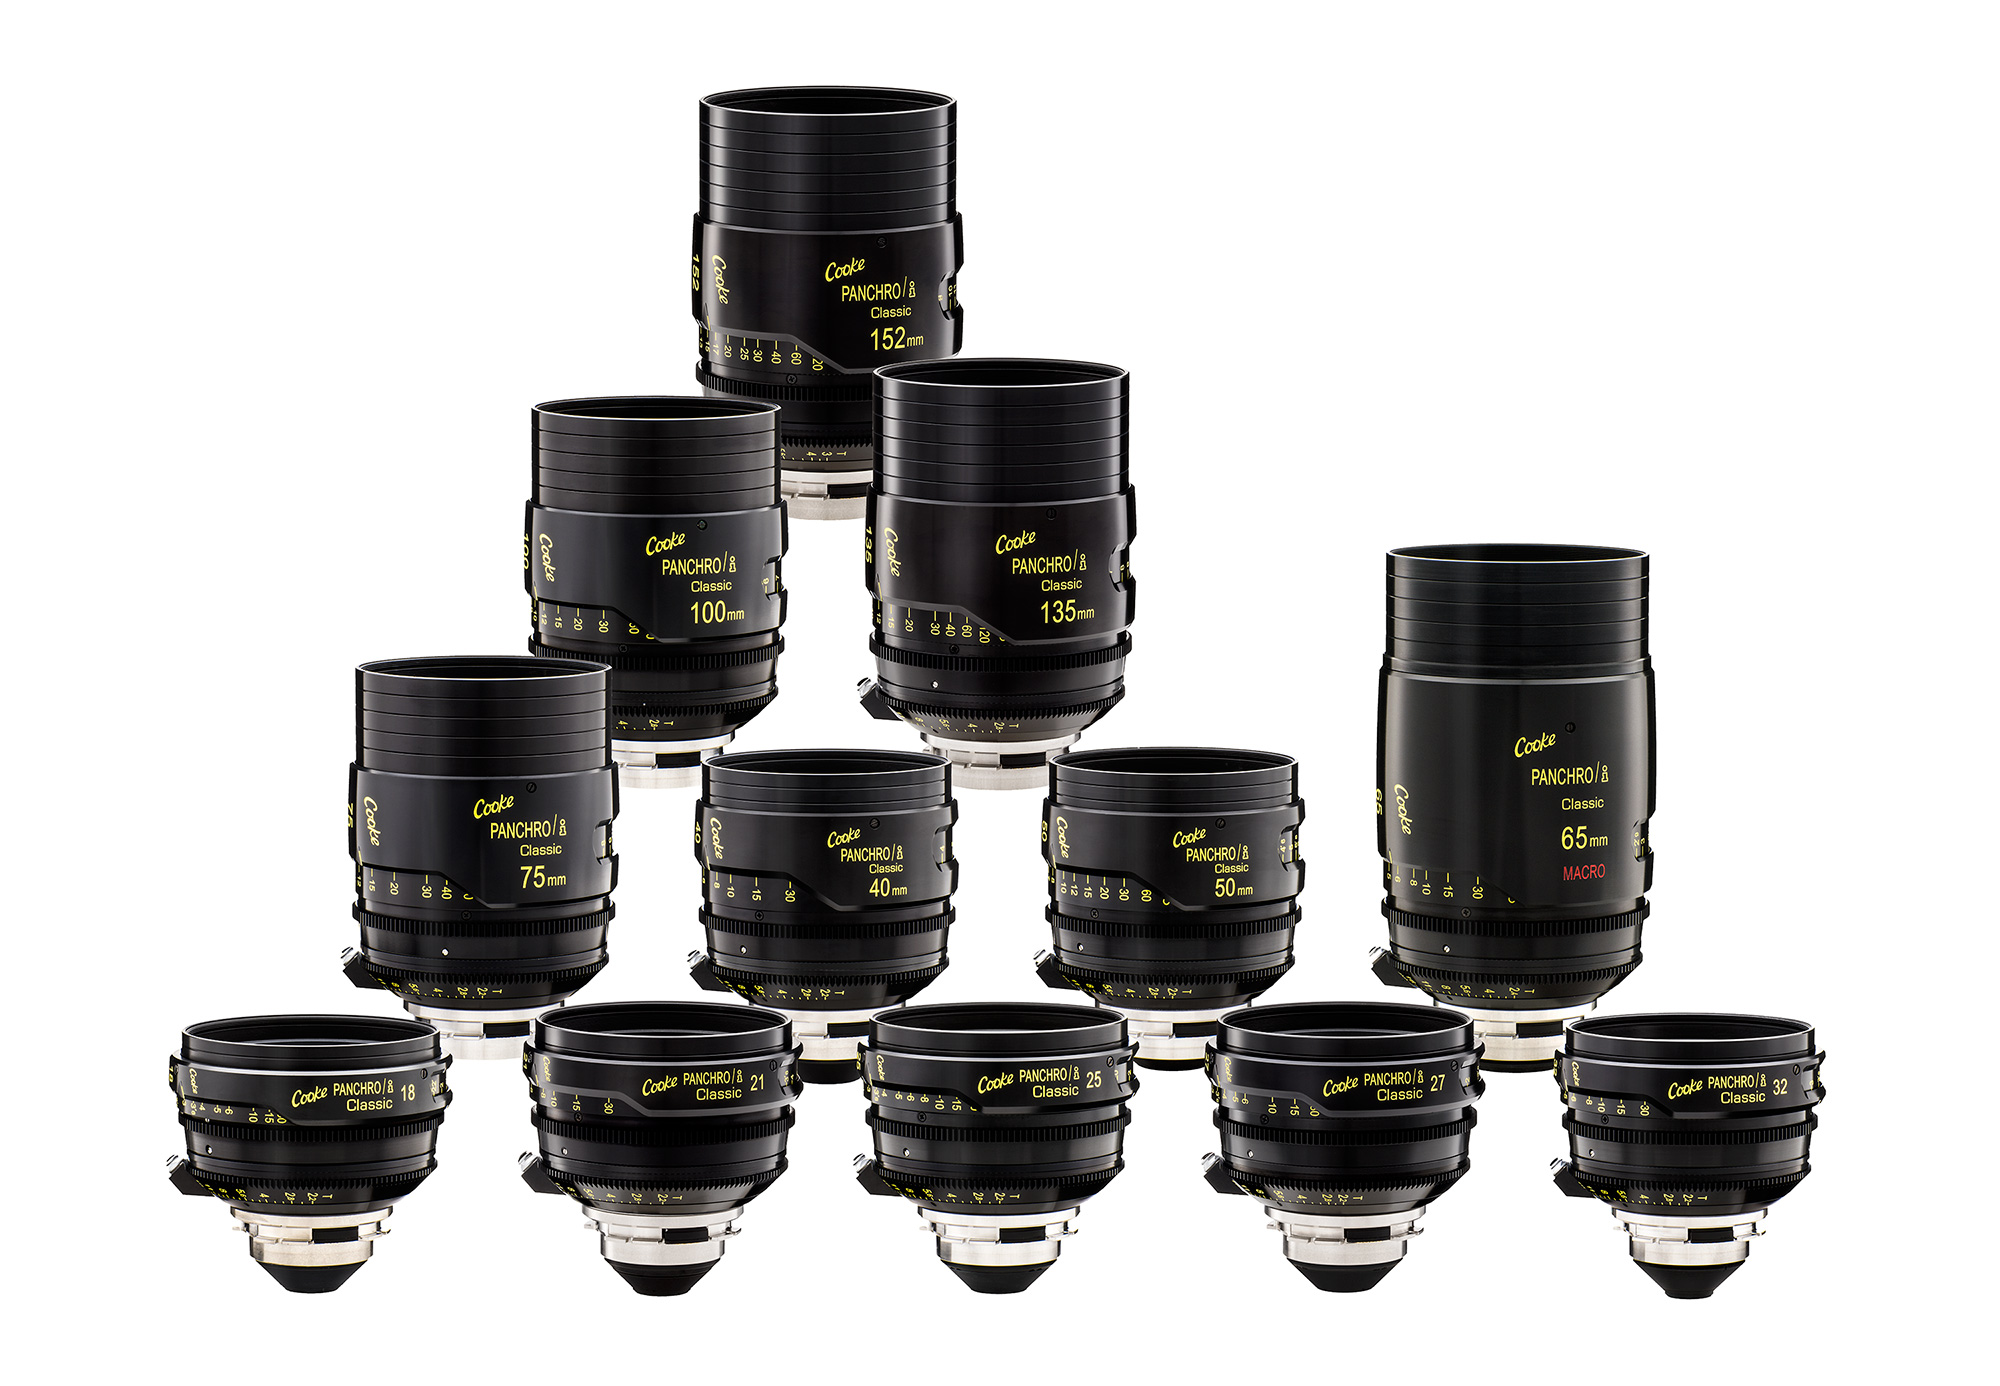 Cooke Panchro/i Classic S35 Lens Series